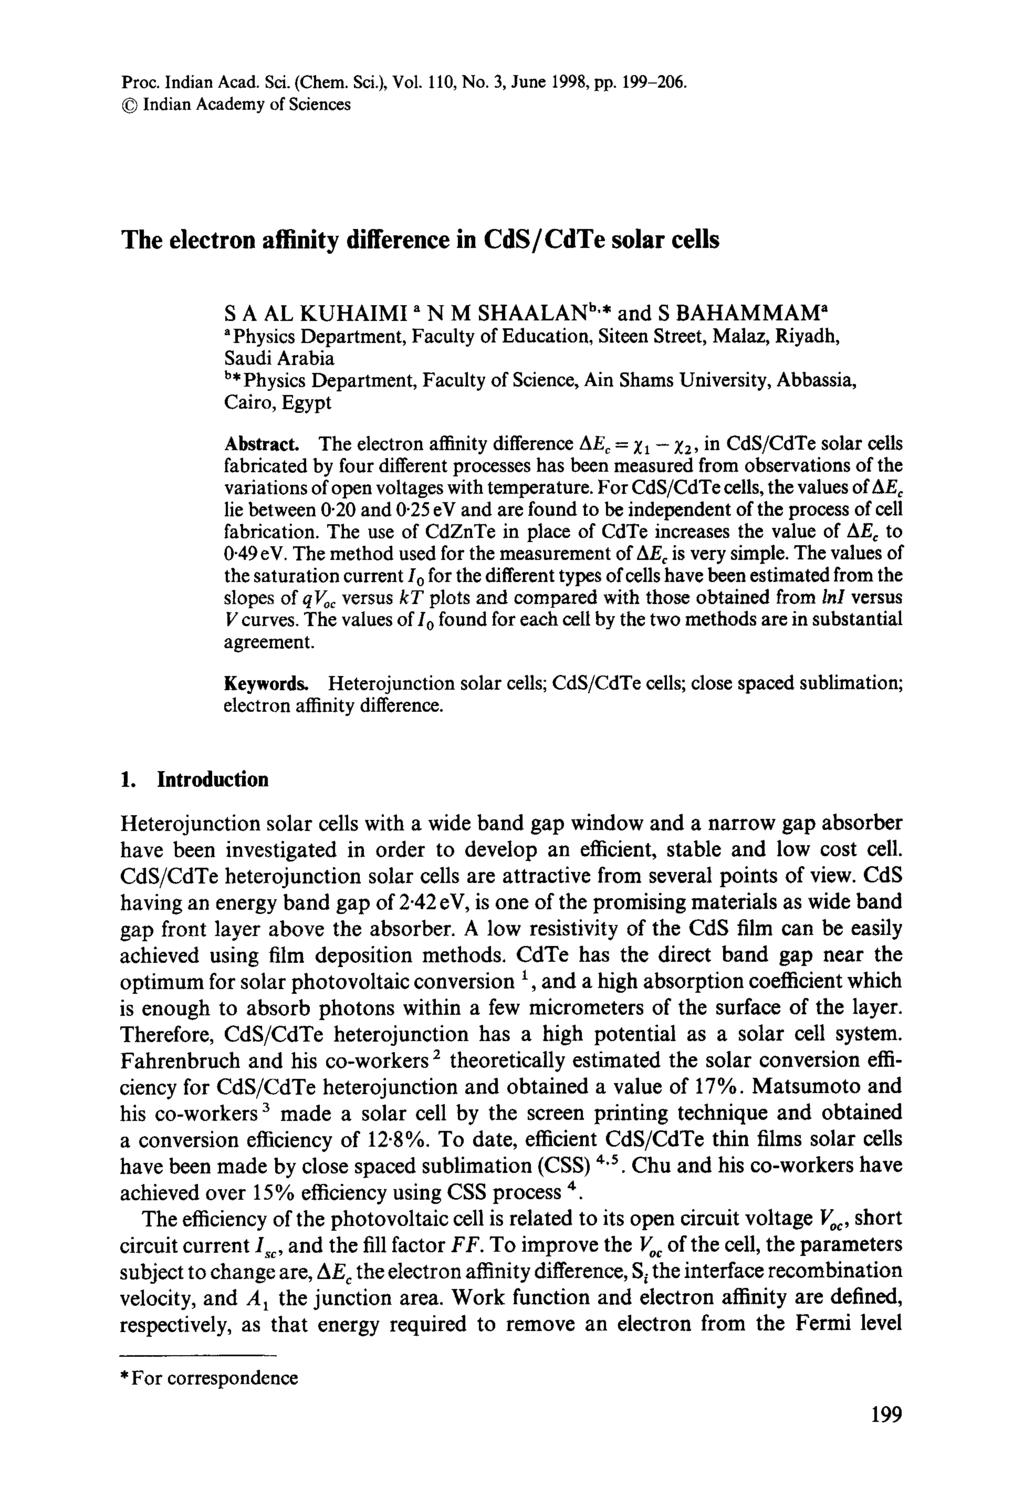 Proc. Indian Acad. Sci. (Chem. Sci.), Vol. 110, No. 3, June 1998, pp. 199-206.